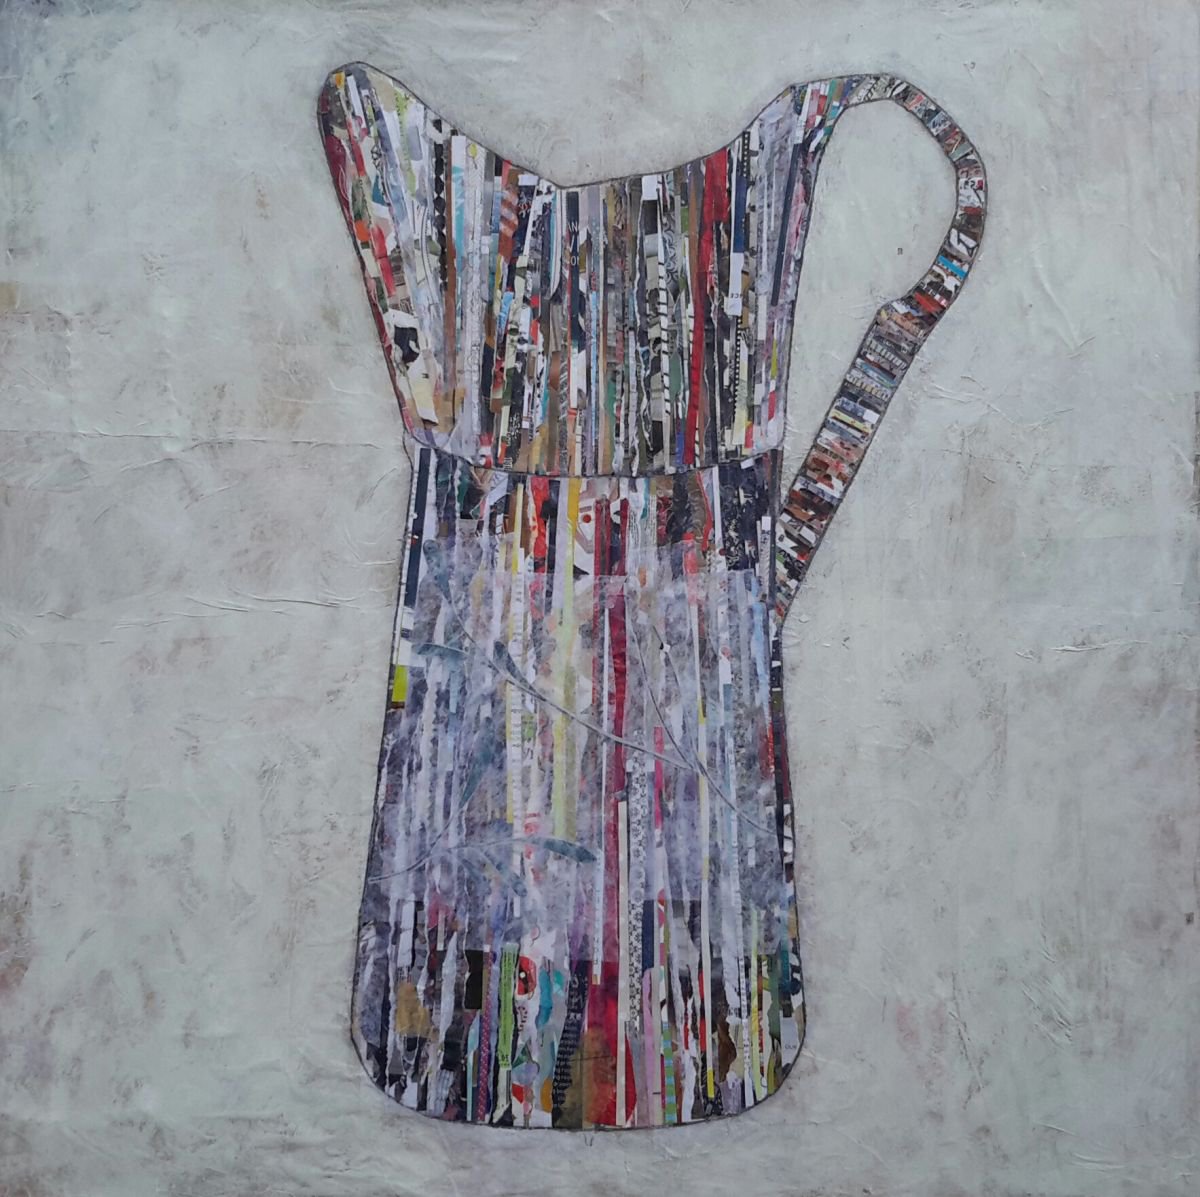 A colourful jug, 2016 by Emma Bennett